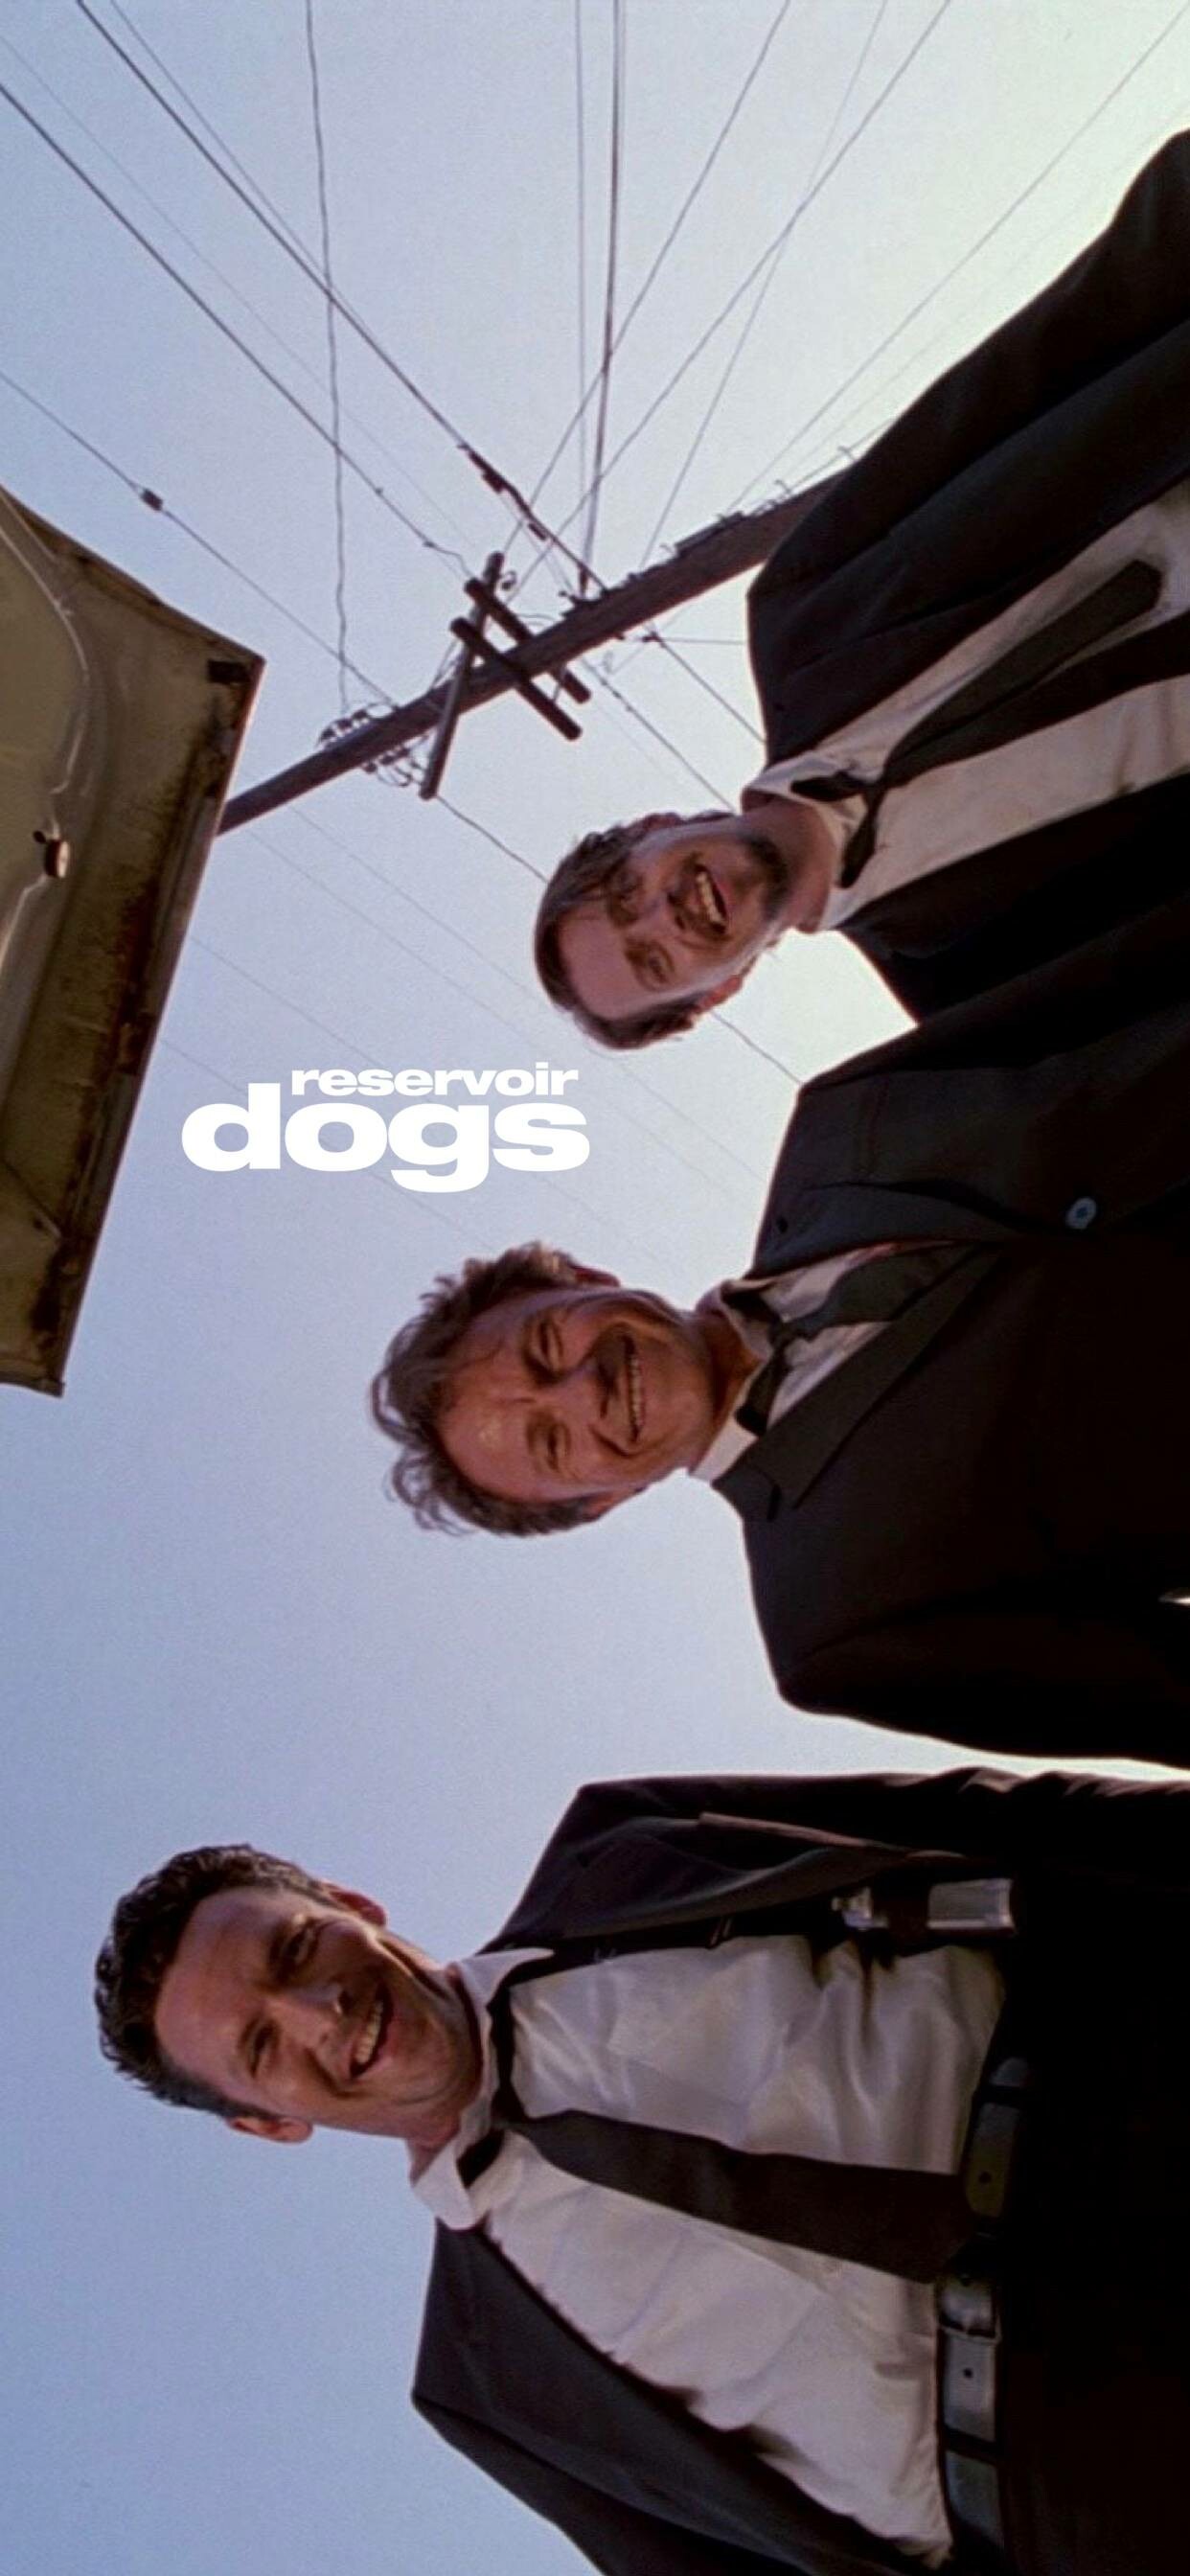 Reservoir Dogs: Harvey Keitel, Steve Buscemi, Michael Madsen, 1992 movie. 1250x2690 HD Wallpaper.